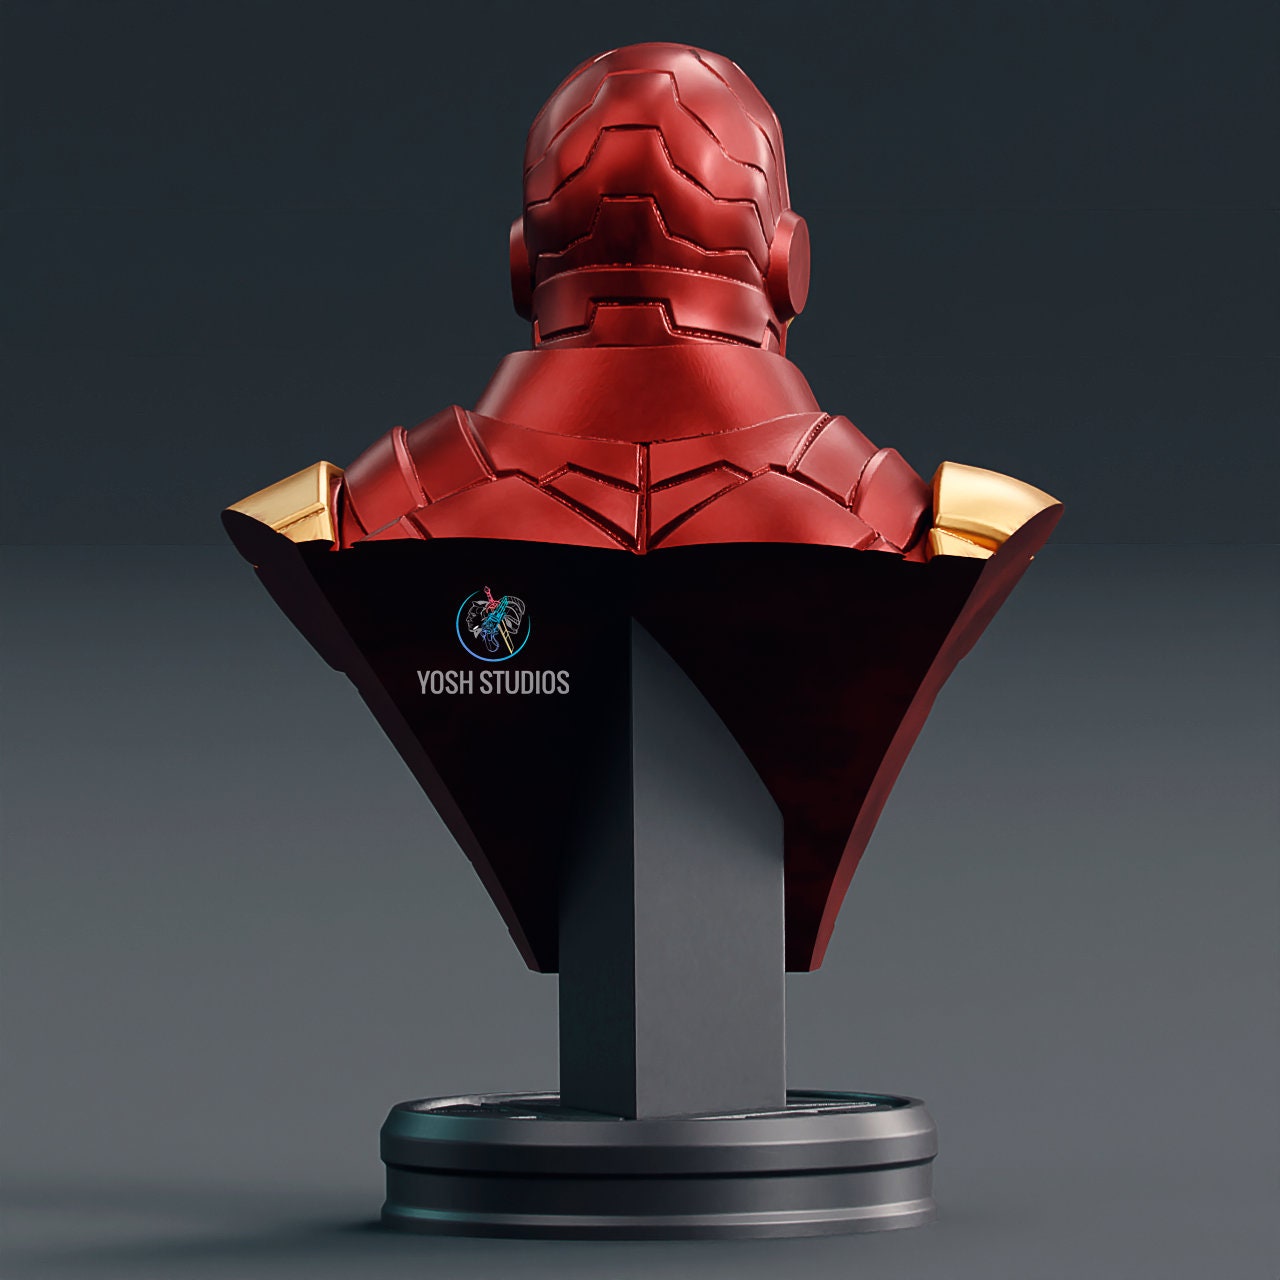 Iron Man Model 70 Armor 3D Print File STL 